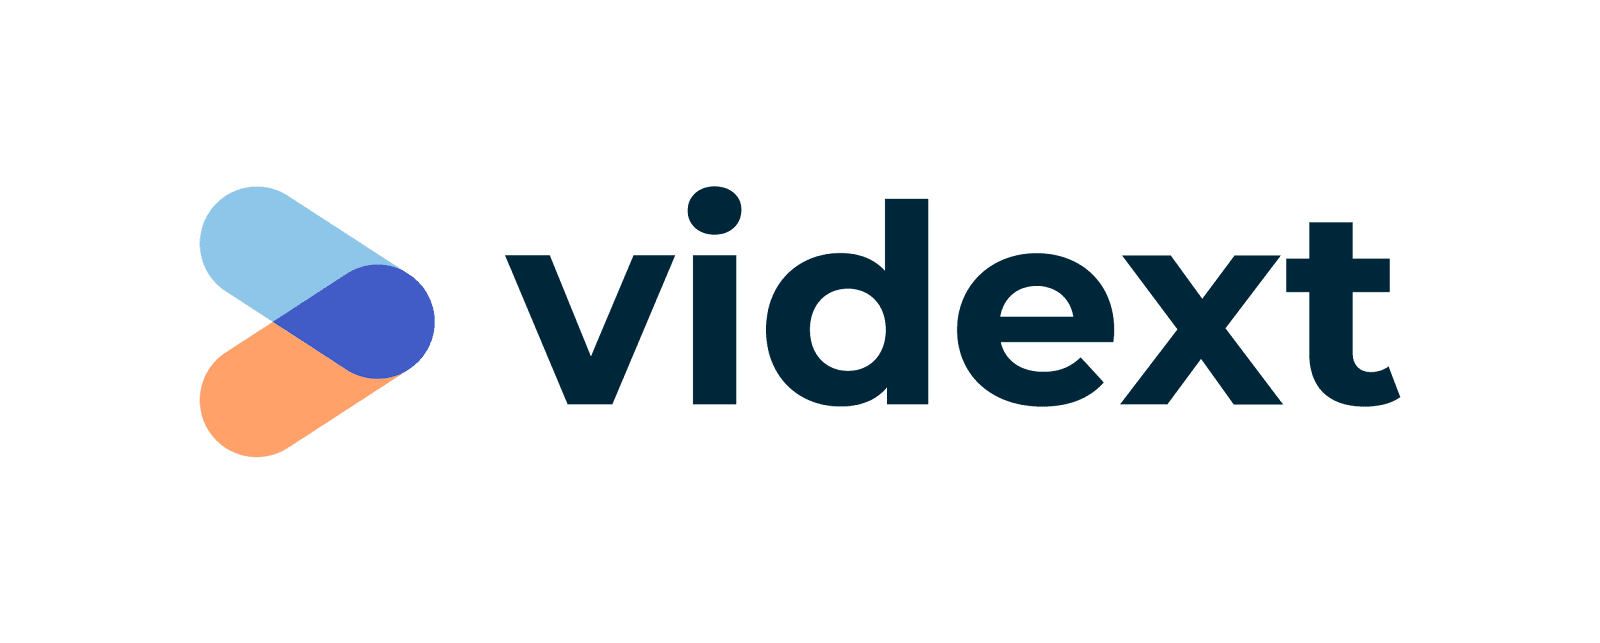 Vidext logo.